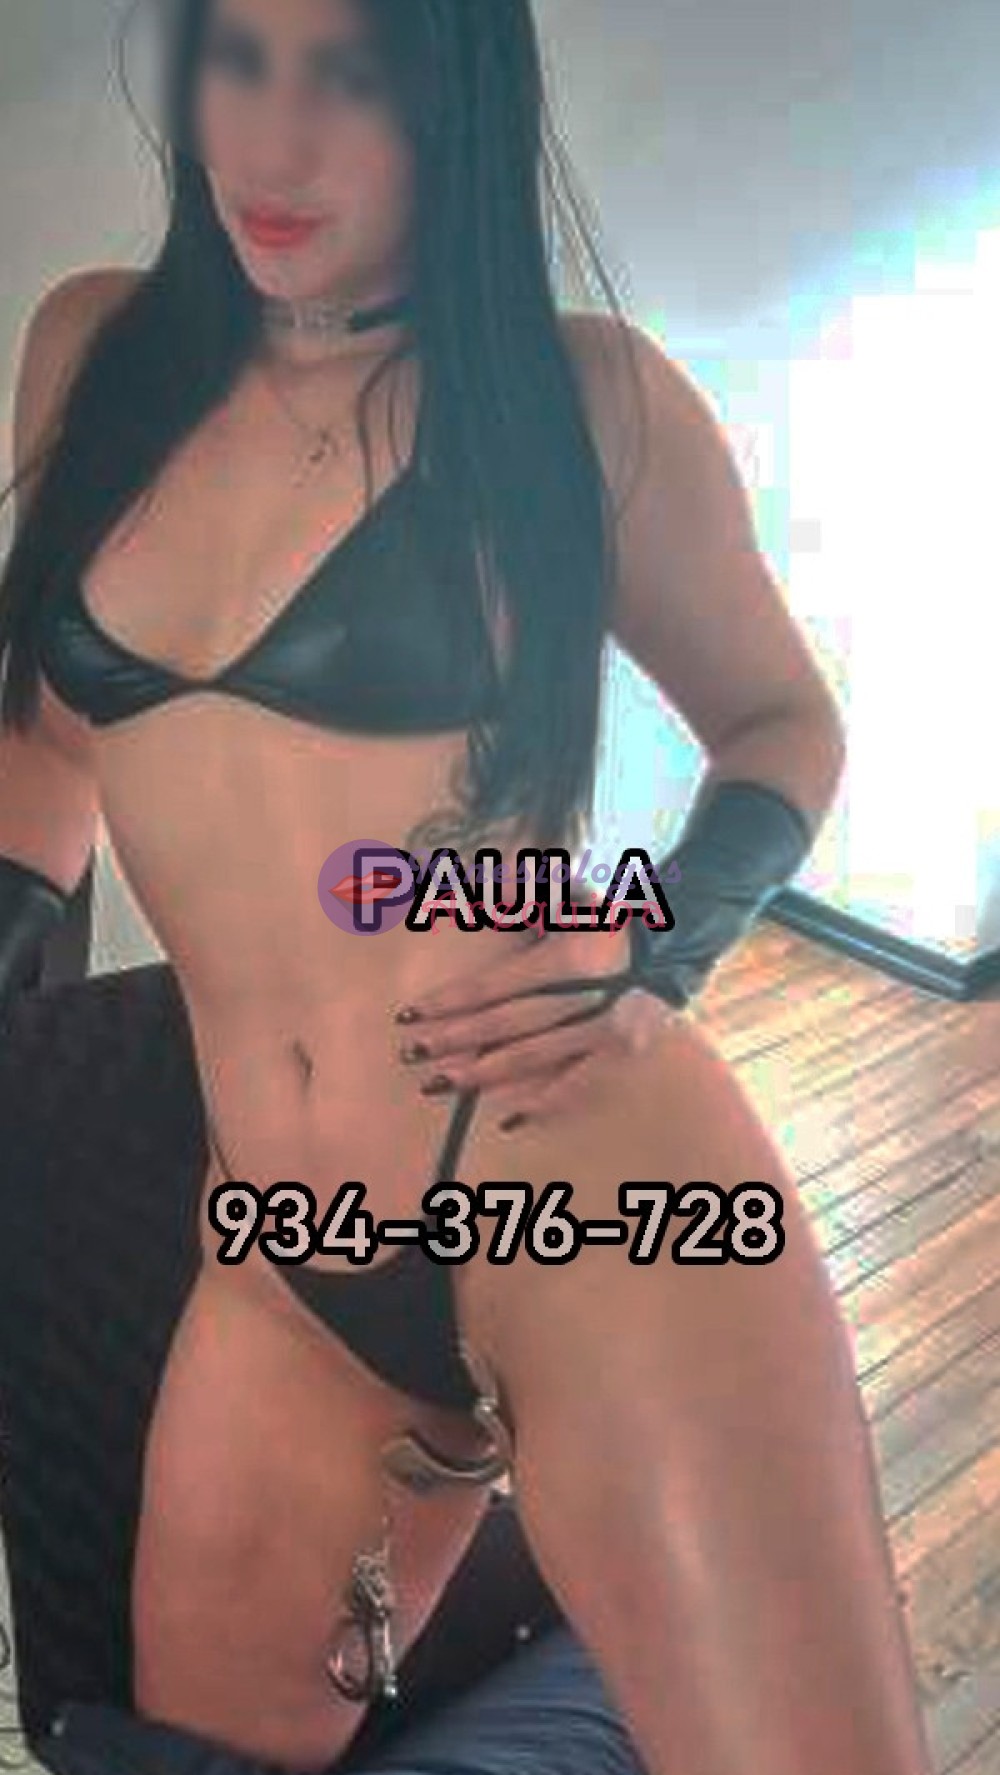 Paula 934376728 colombiana adicta al sexo sin control